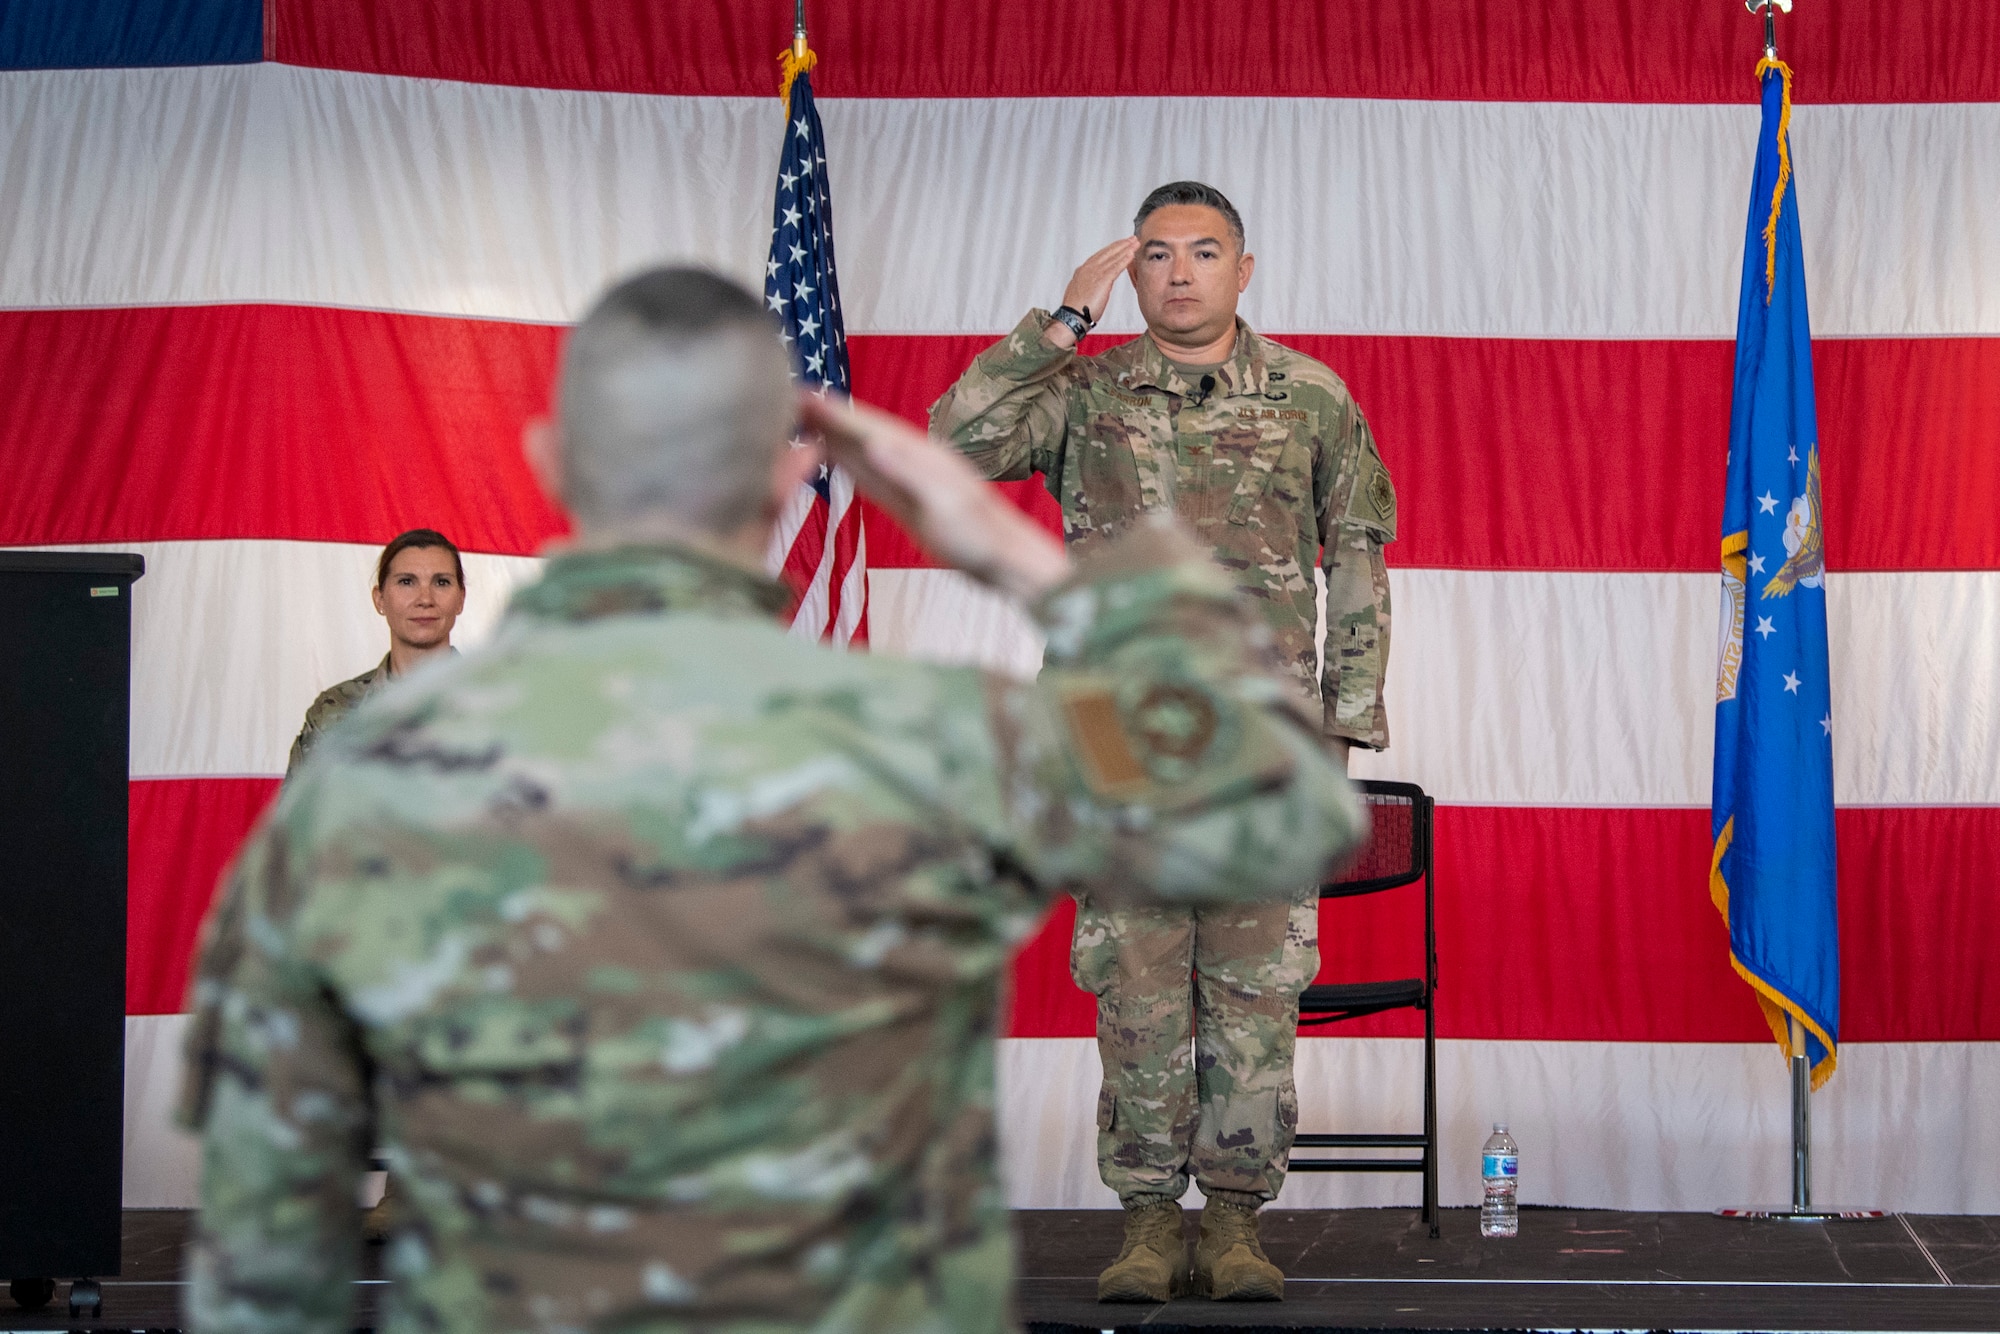 Col. Barron receives his last salute